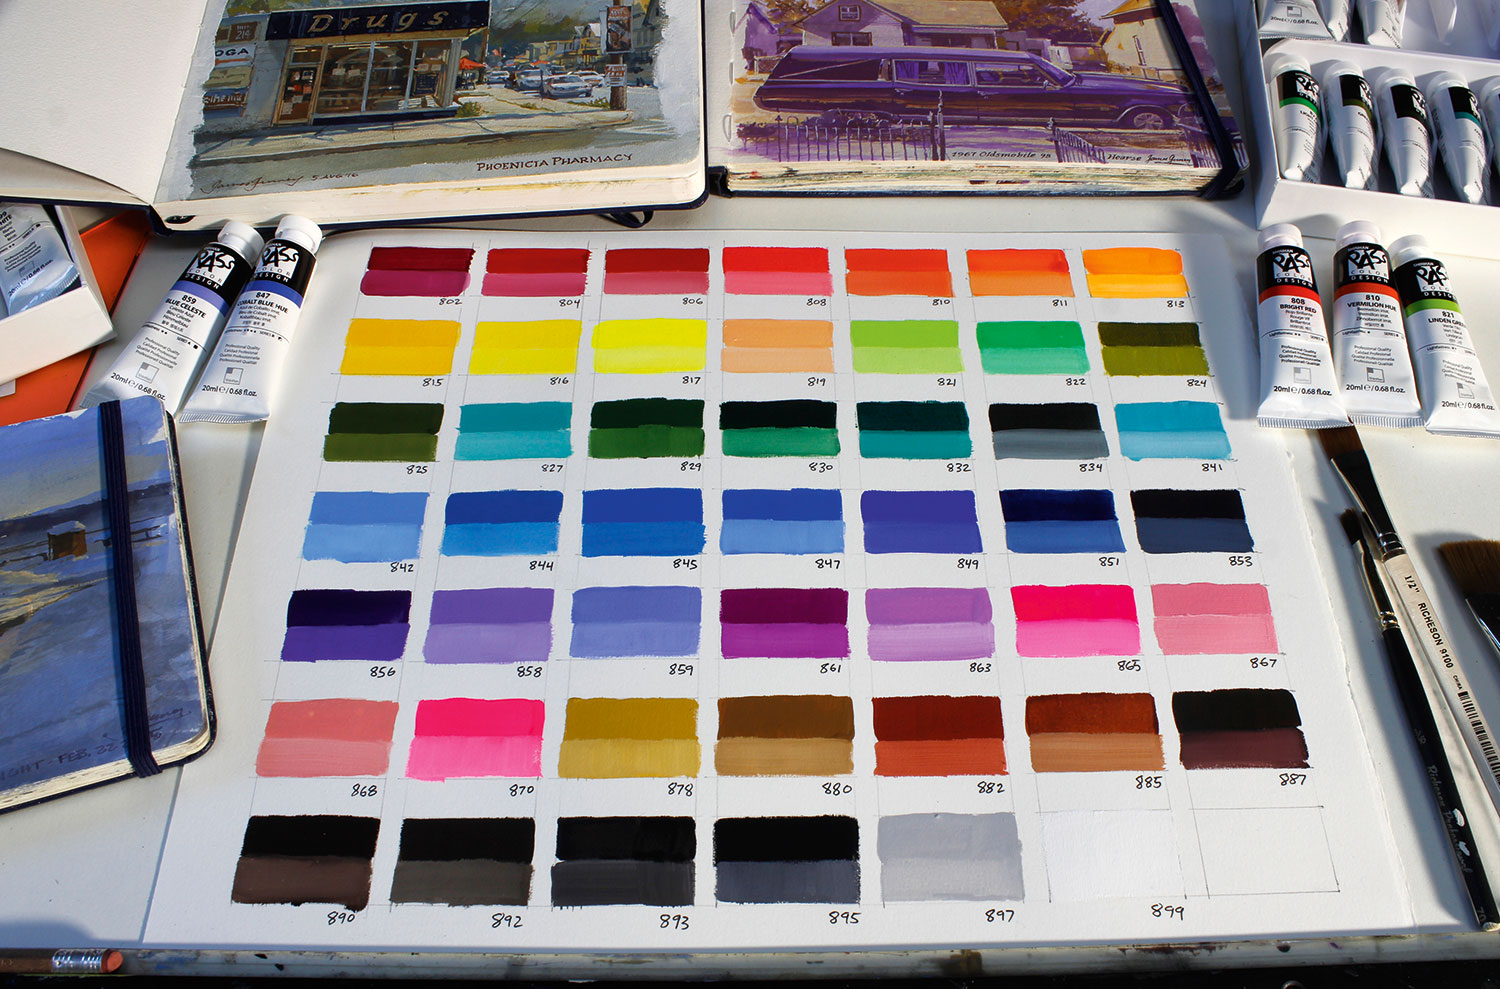 Review & demo - Shinhan PASS Color hybrid gouache/watercolor paints 